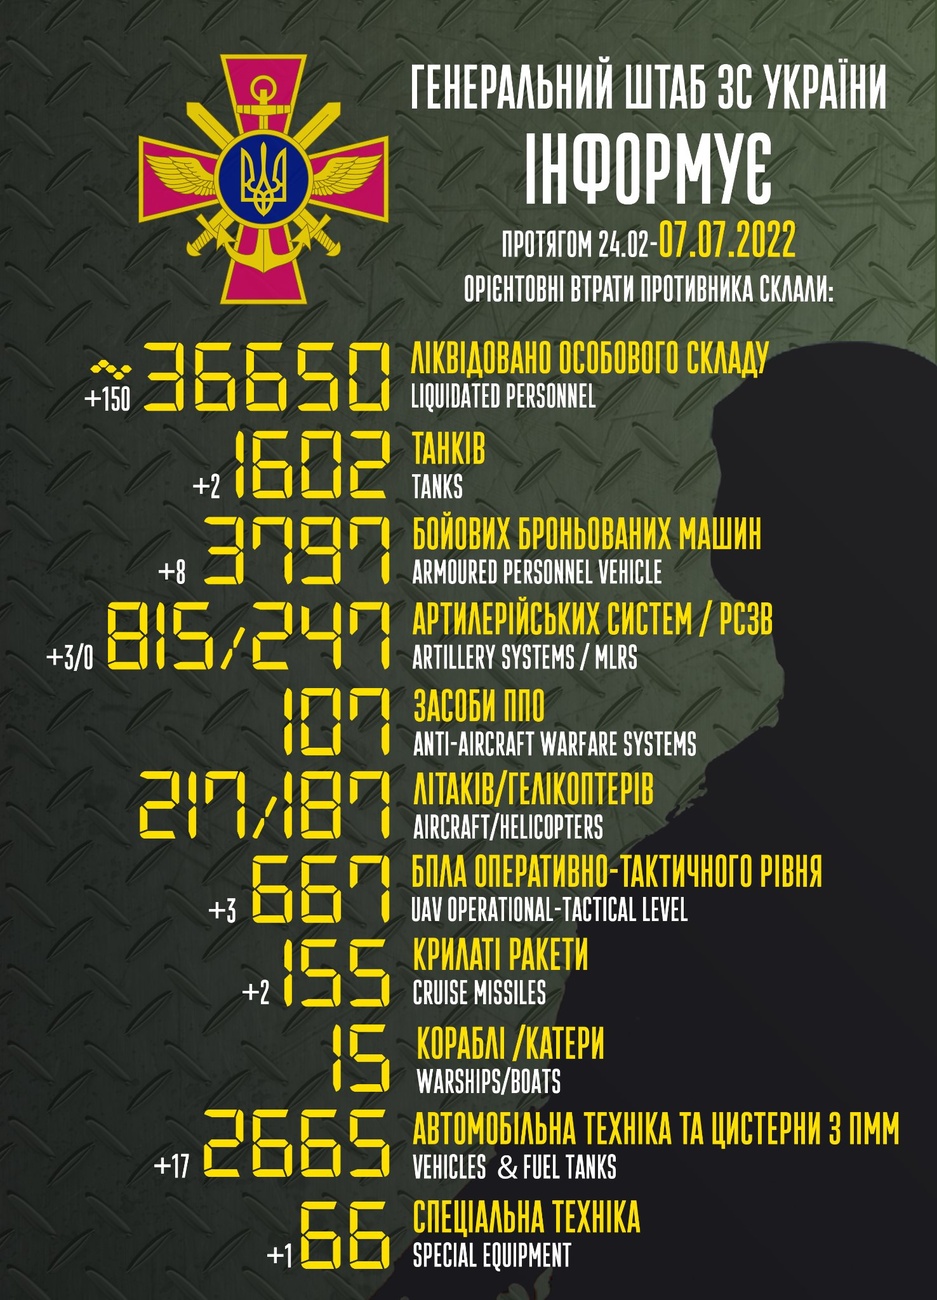 Инфографика: Генеральний штаб ЗСУ / General Staff of the Armed Forces of Ukraine / Facebook